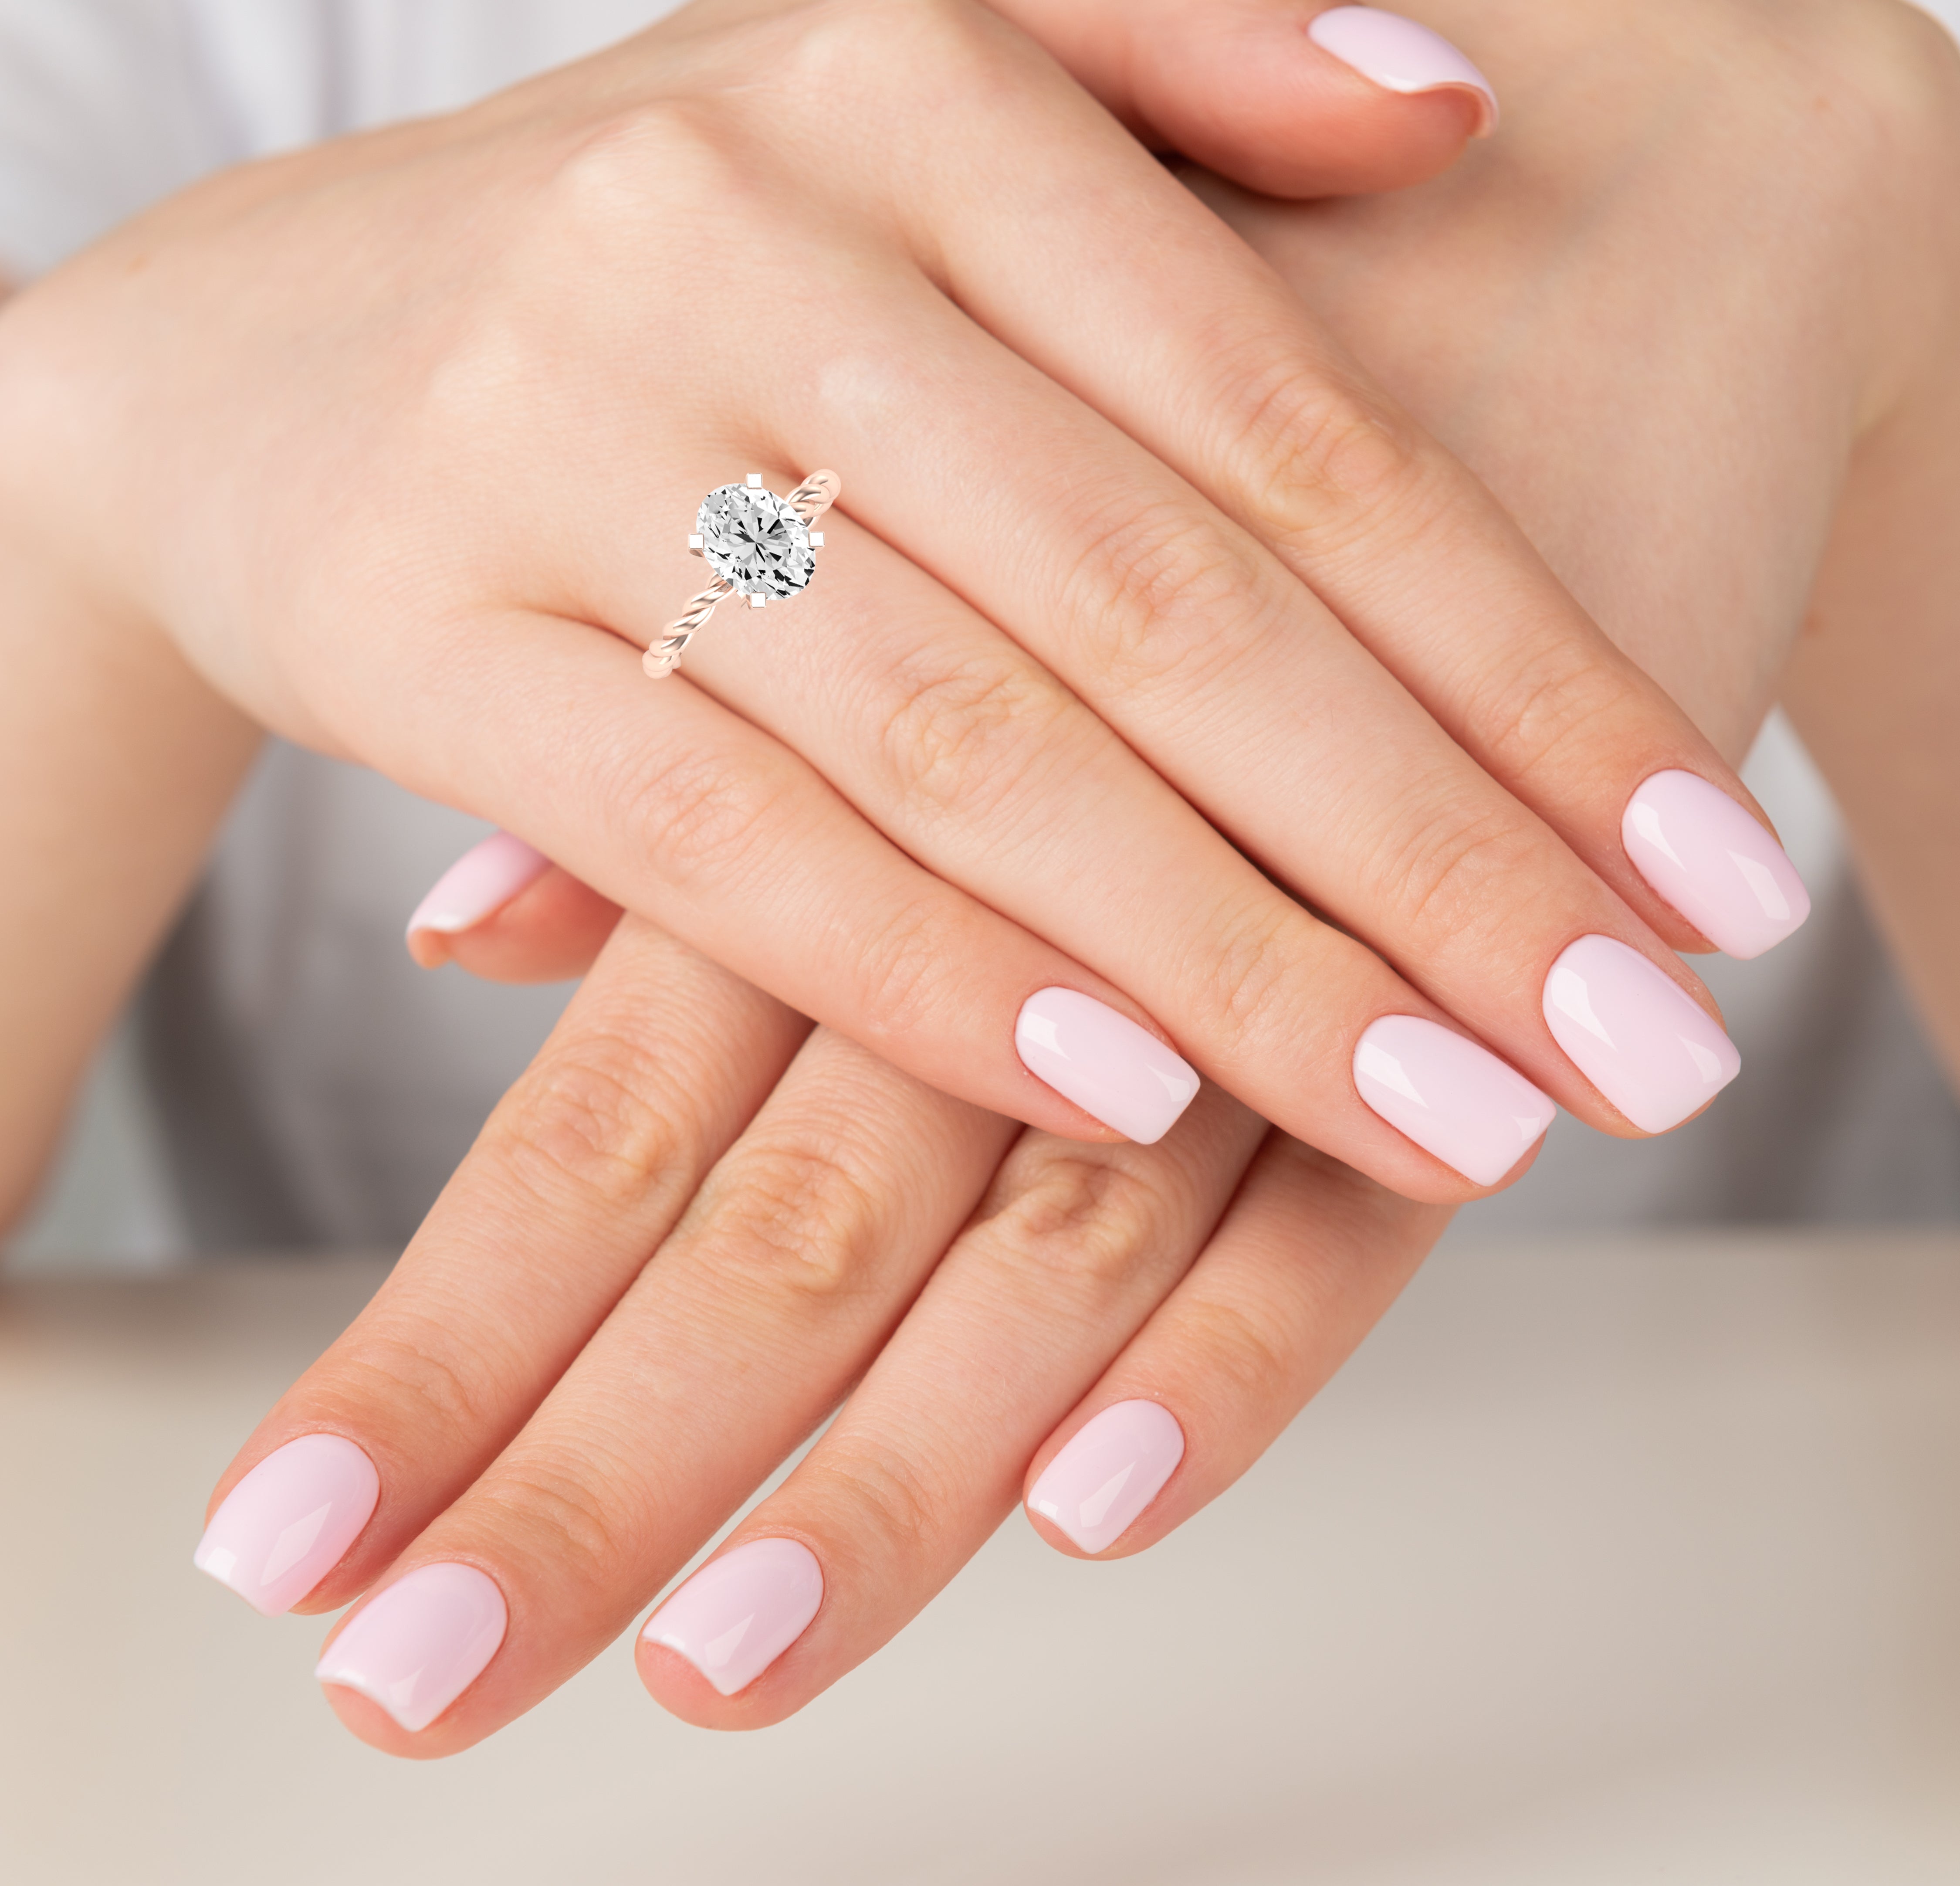 Balsam Oval Diamond Engagement Ring (Lab Grown Igi Cert) rosegold